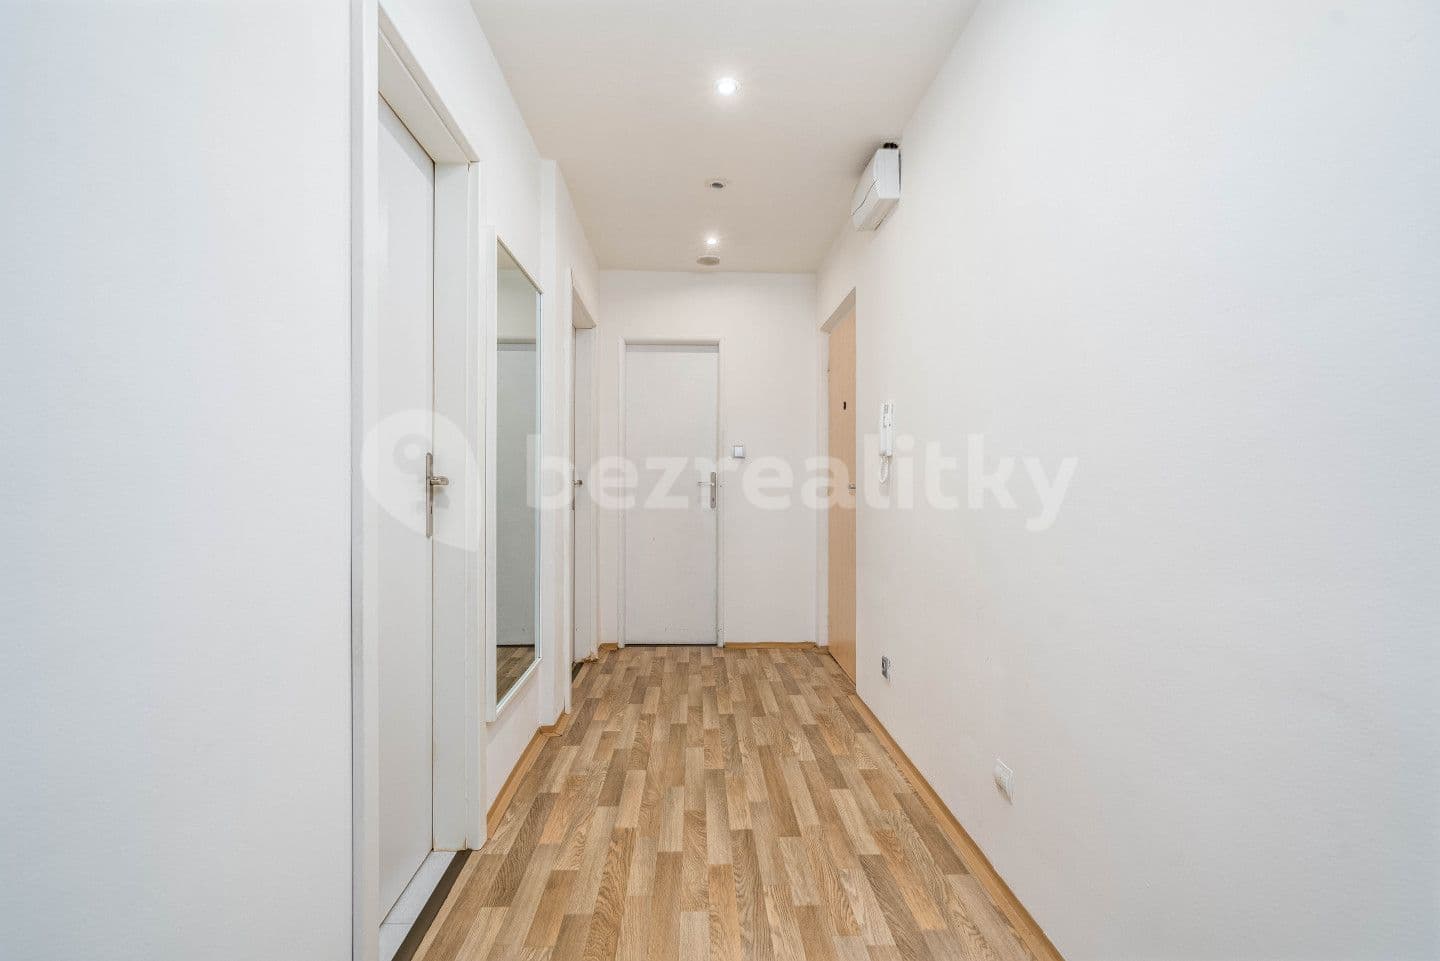 Predaj bytu 3-izbový 96 m², Letců R. A. F., Nymburk, Středočeský kraj